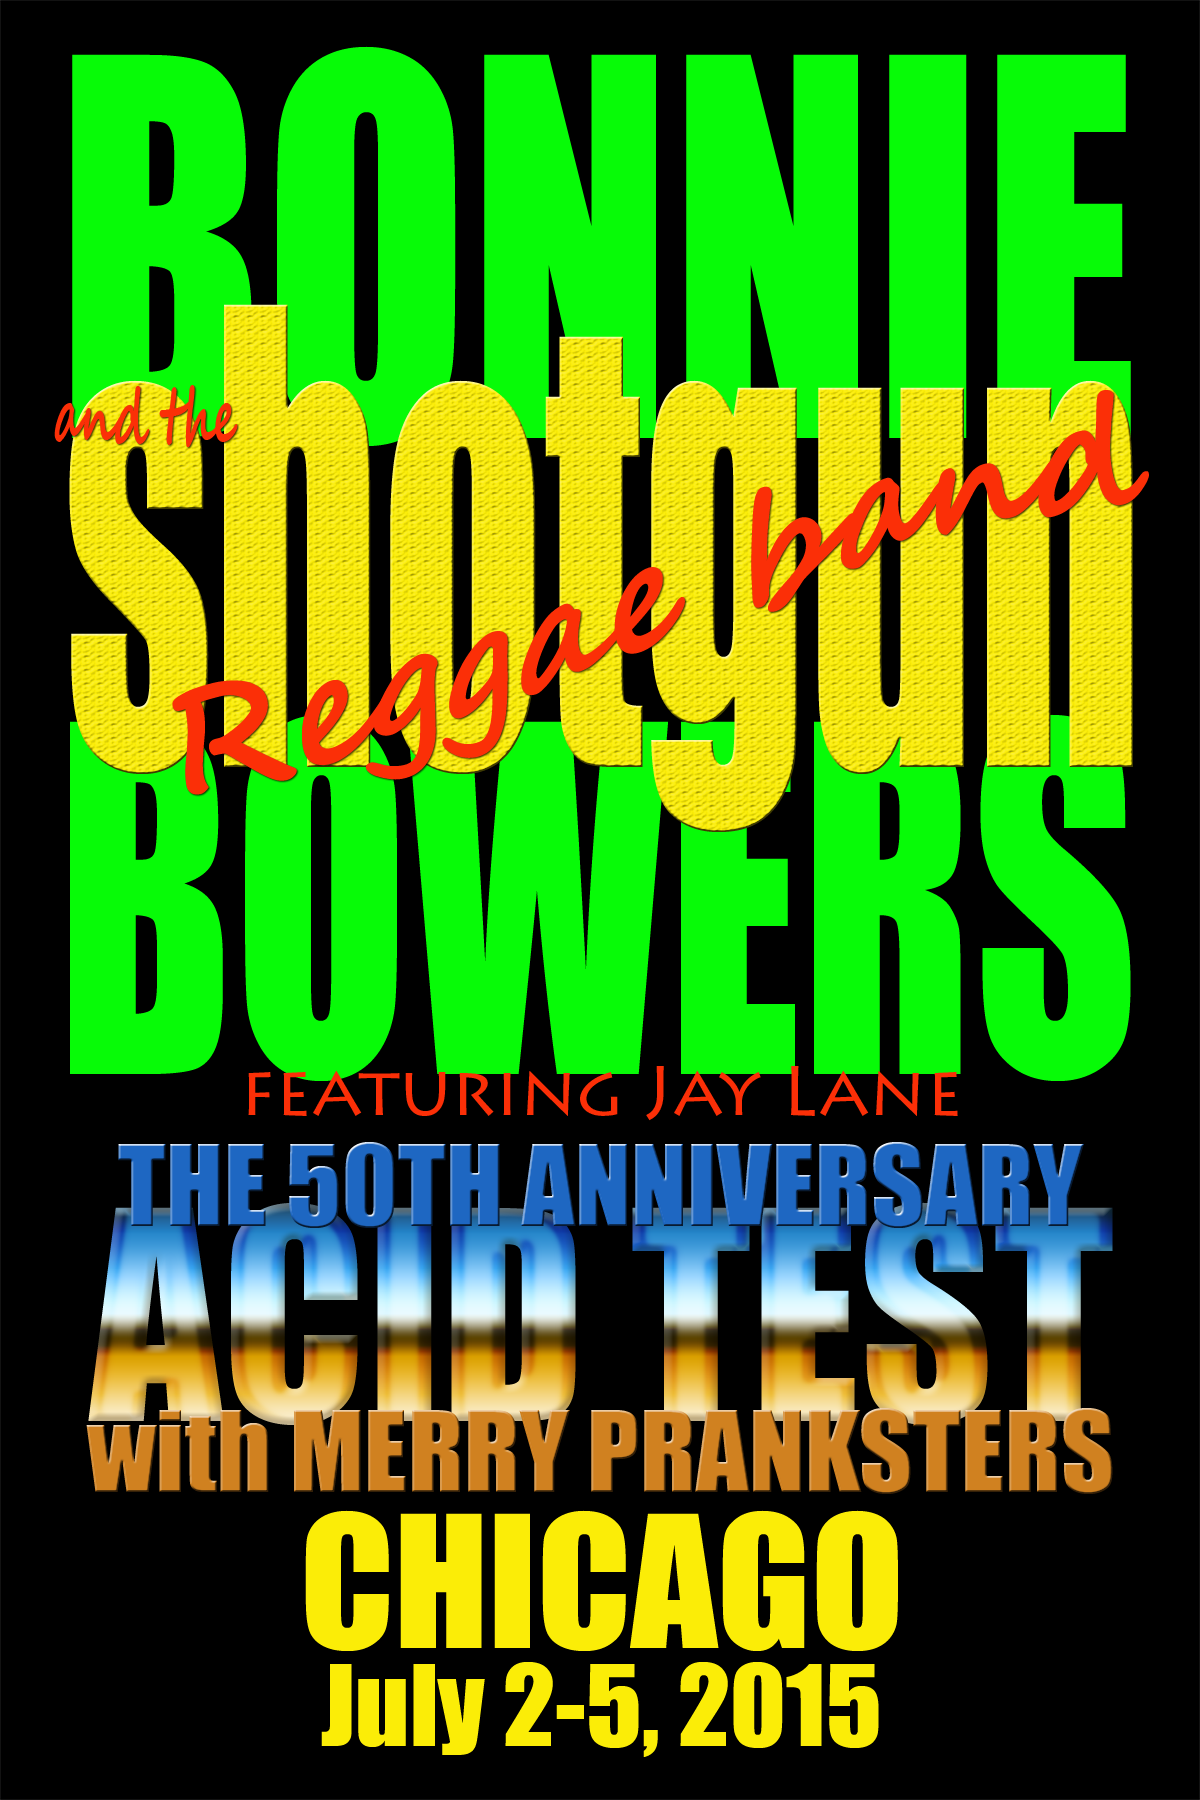 bonnie bowers and the shotgun reggae band featuring Jay Lane  chicago 2015